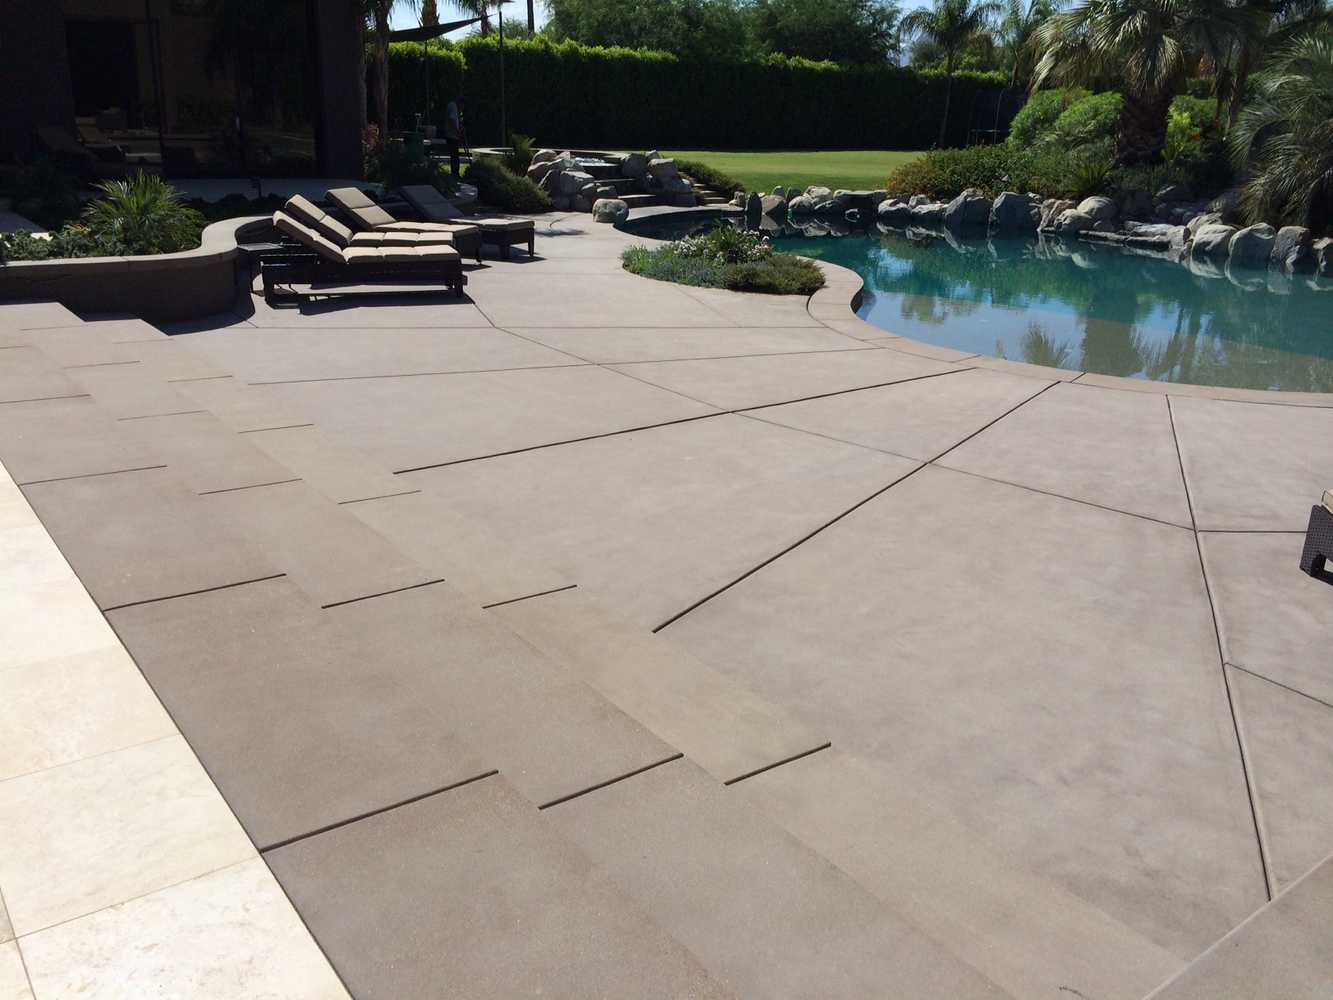 J&L Custom Concrete - Concrete Contractors in Palm Springs Area